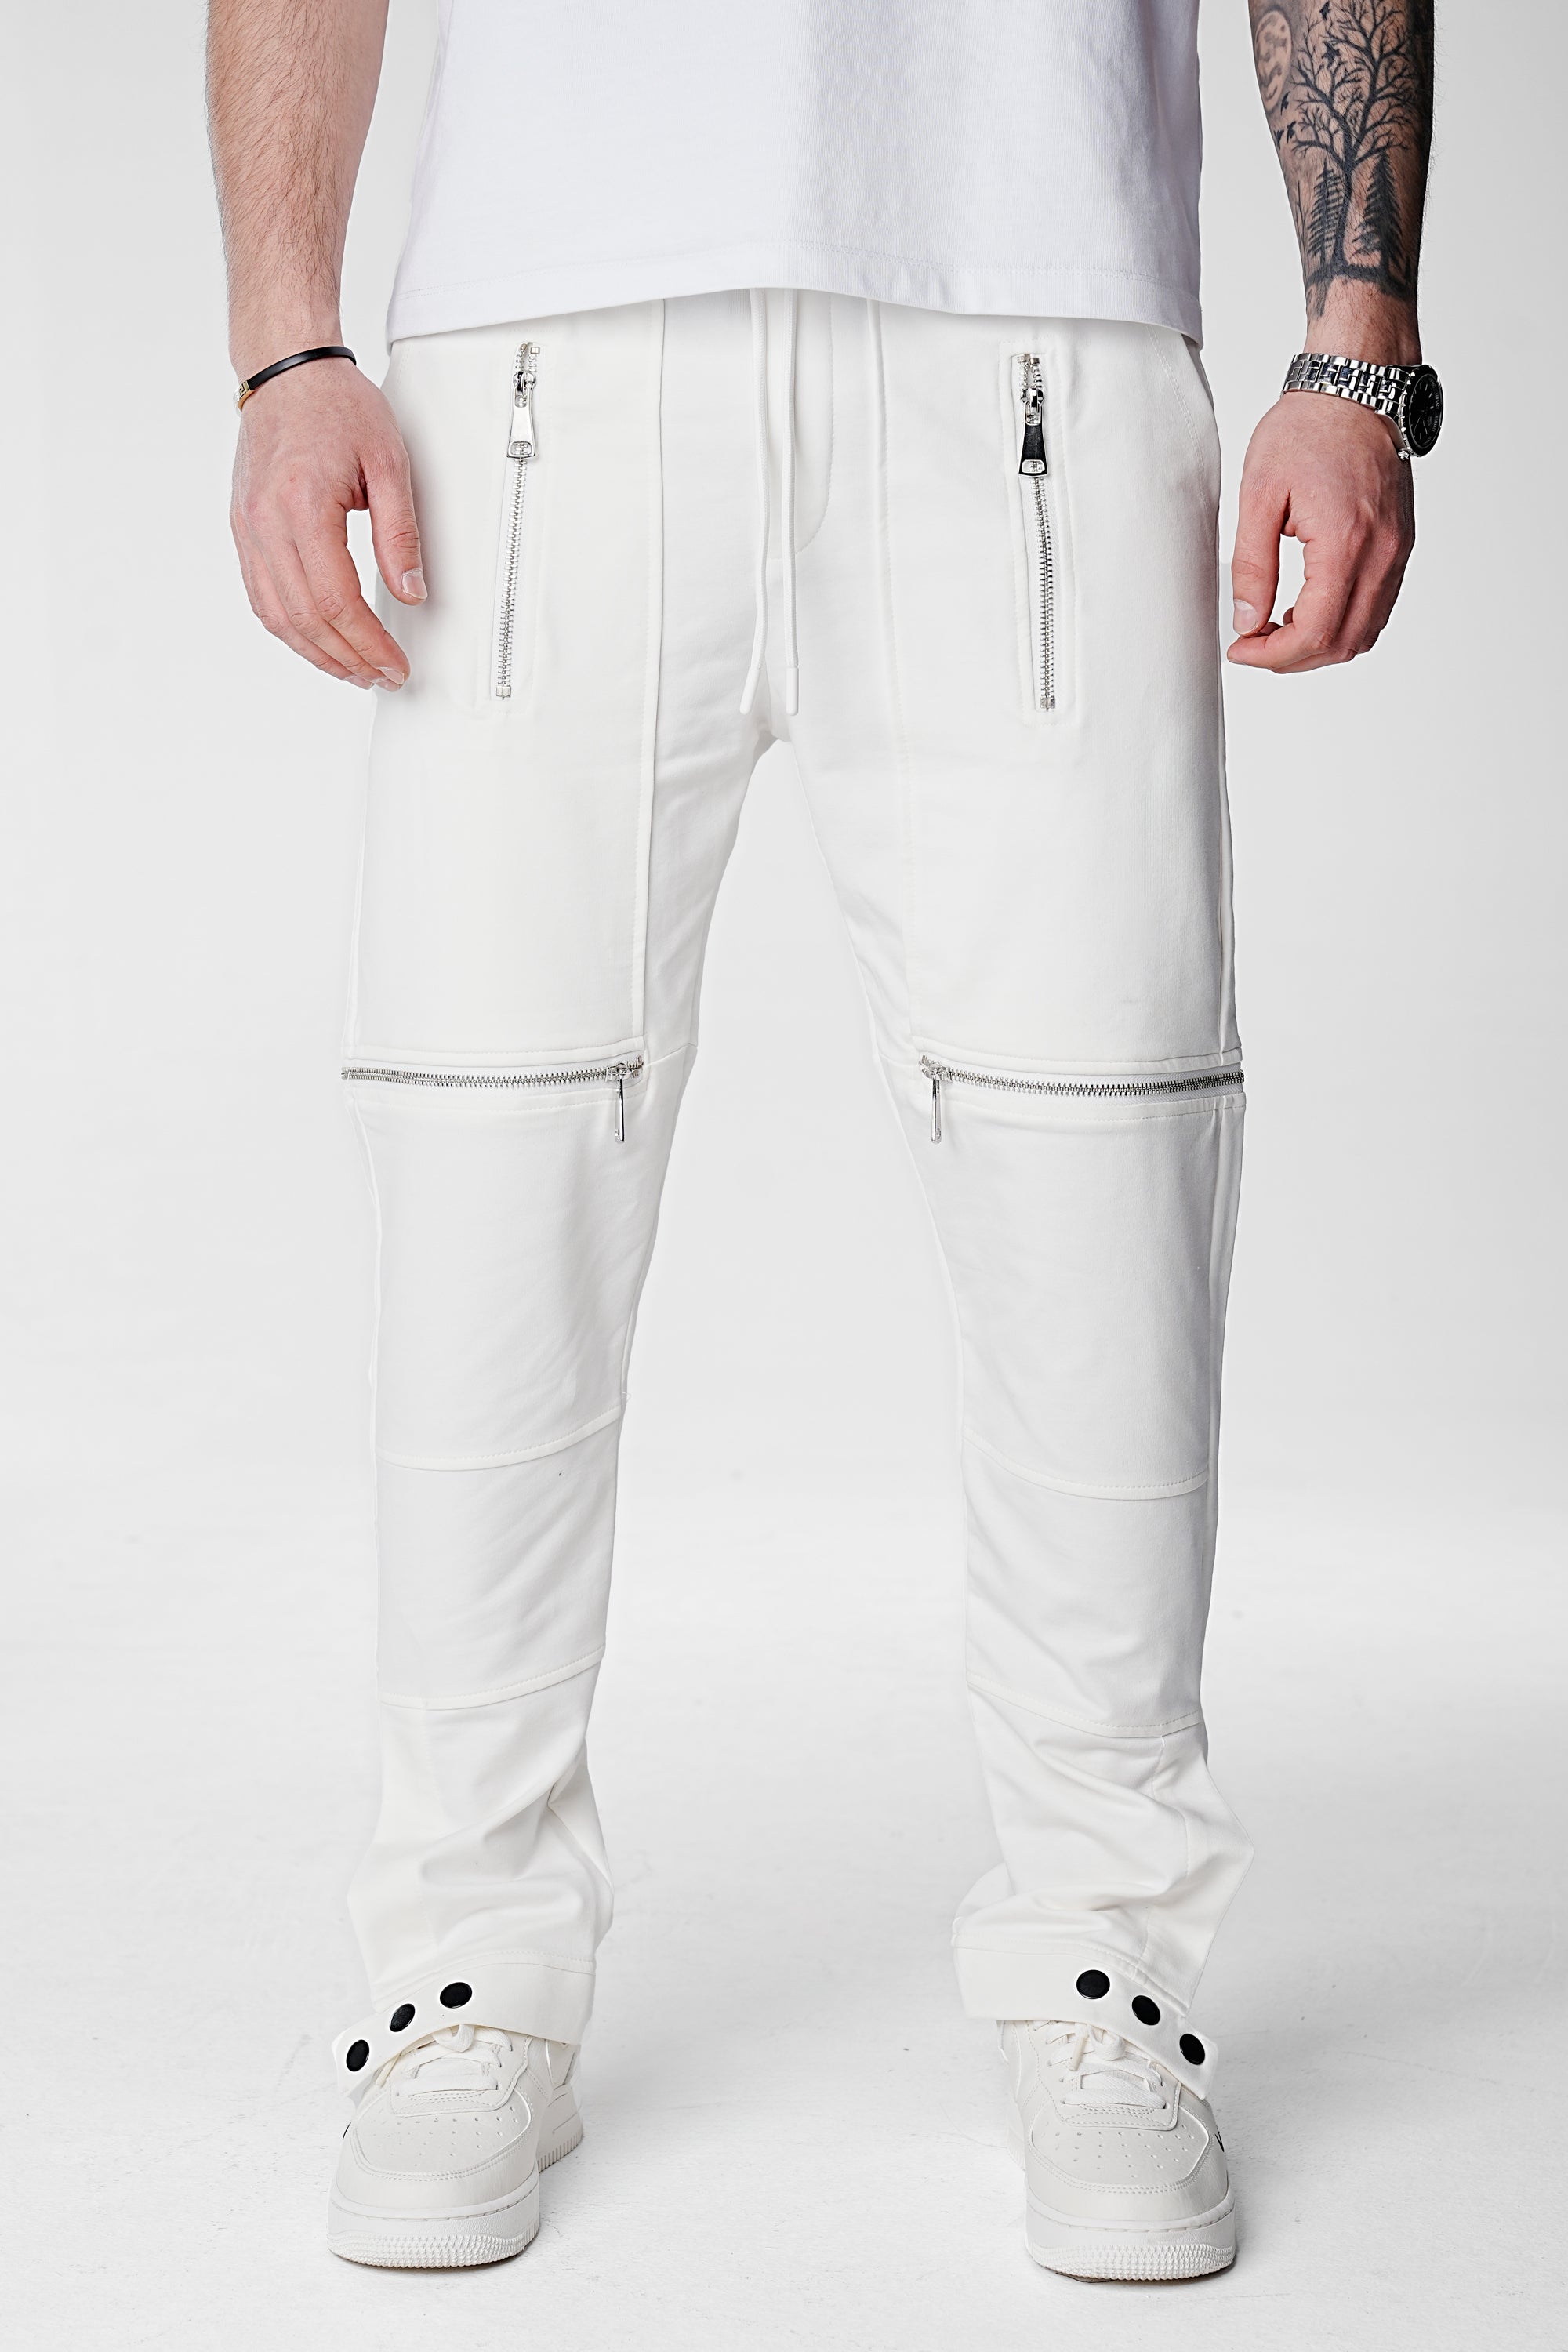 Regular Fit Premium Glory Pants - Cream - UNEFFECTED STUDIOS® - CARGO PANTS - UNEFFECTED STUDIOS®